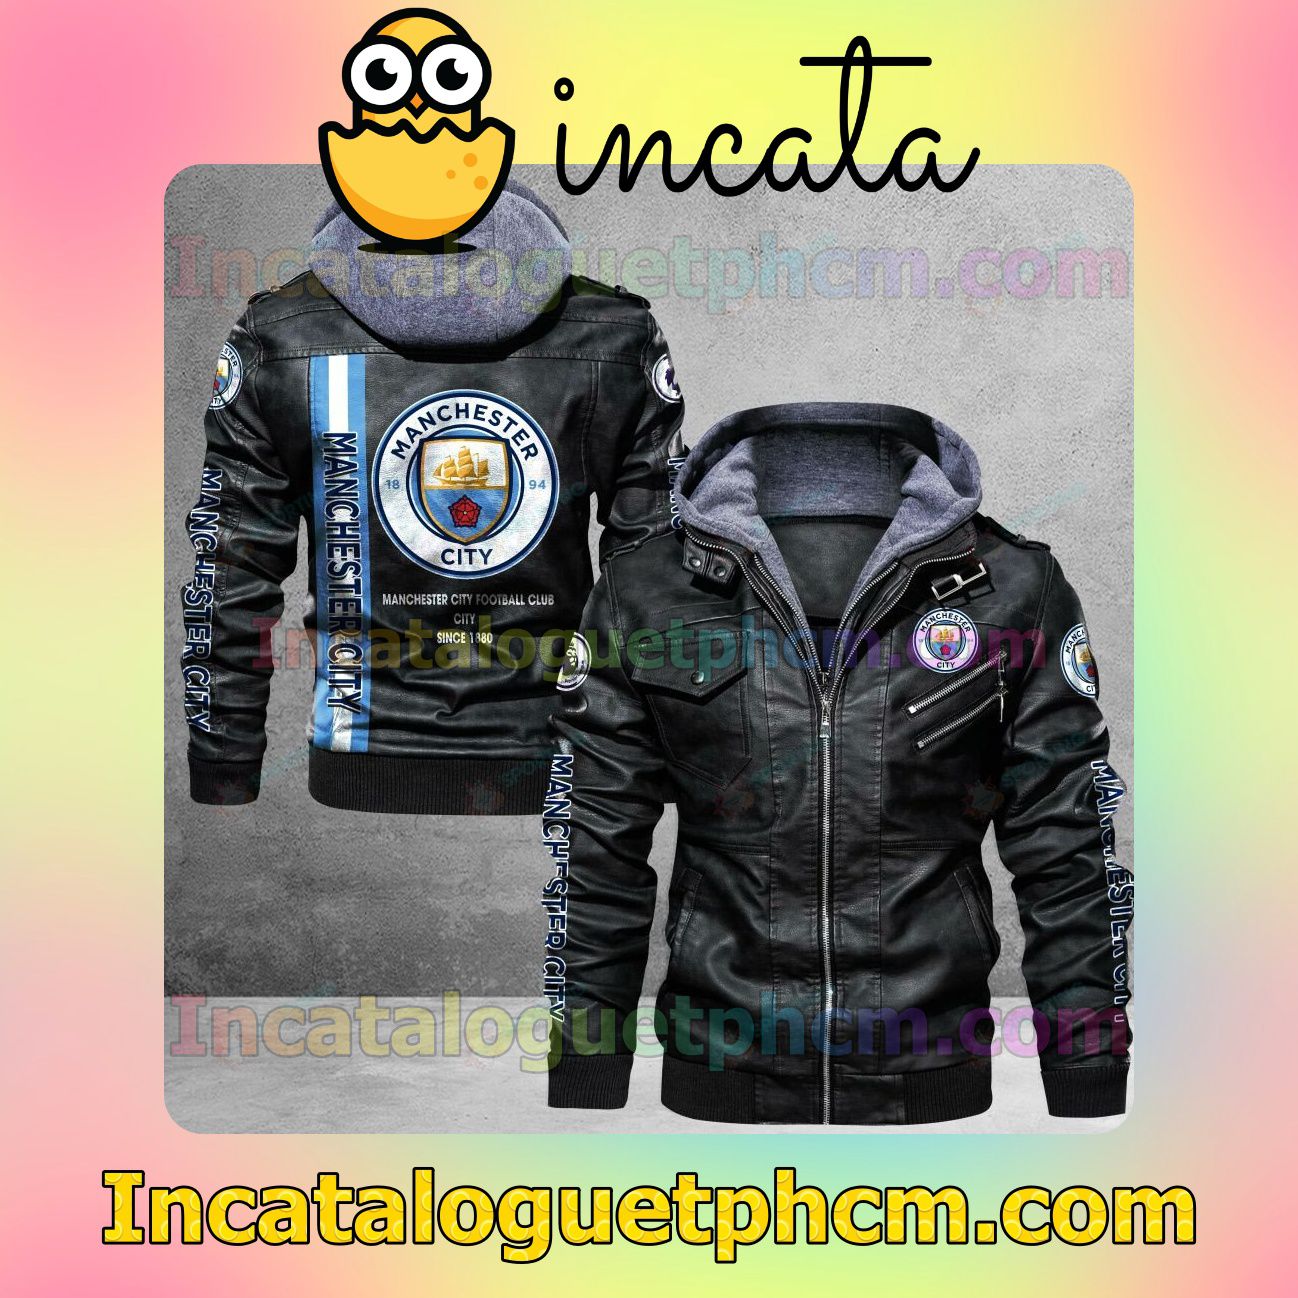 Manchester City F.C Brand Uniform Leather Jacket